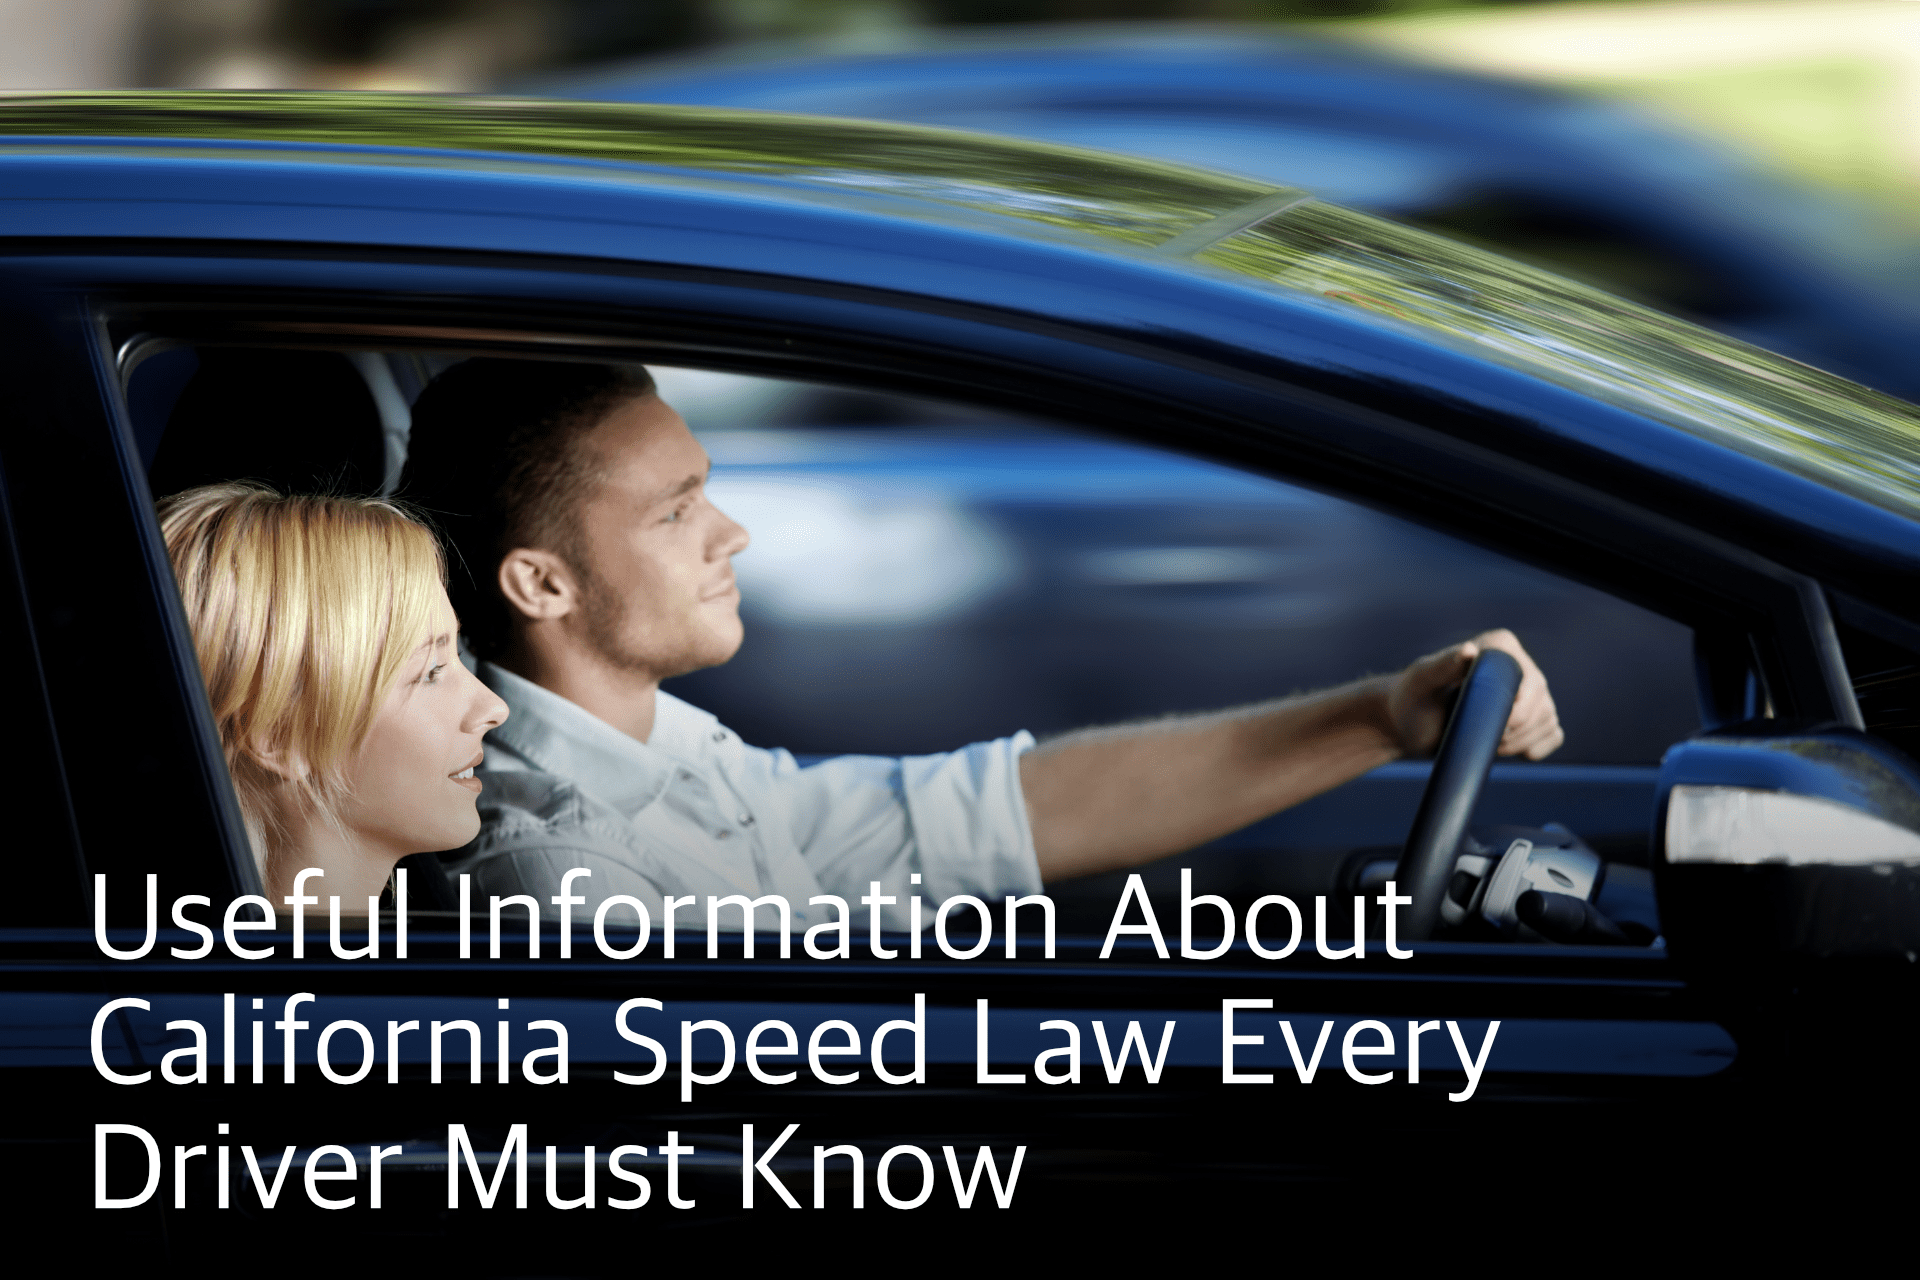 california speed law, Vehicle Code 22350